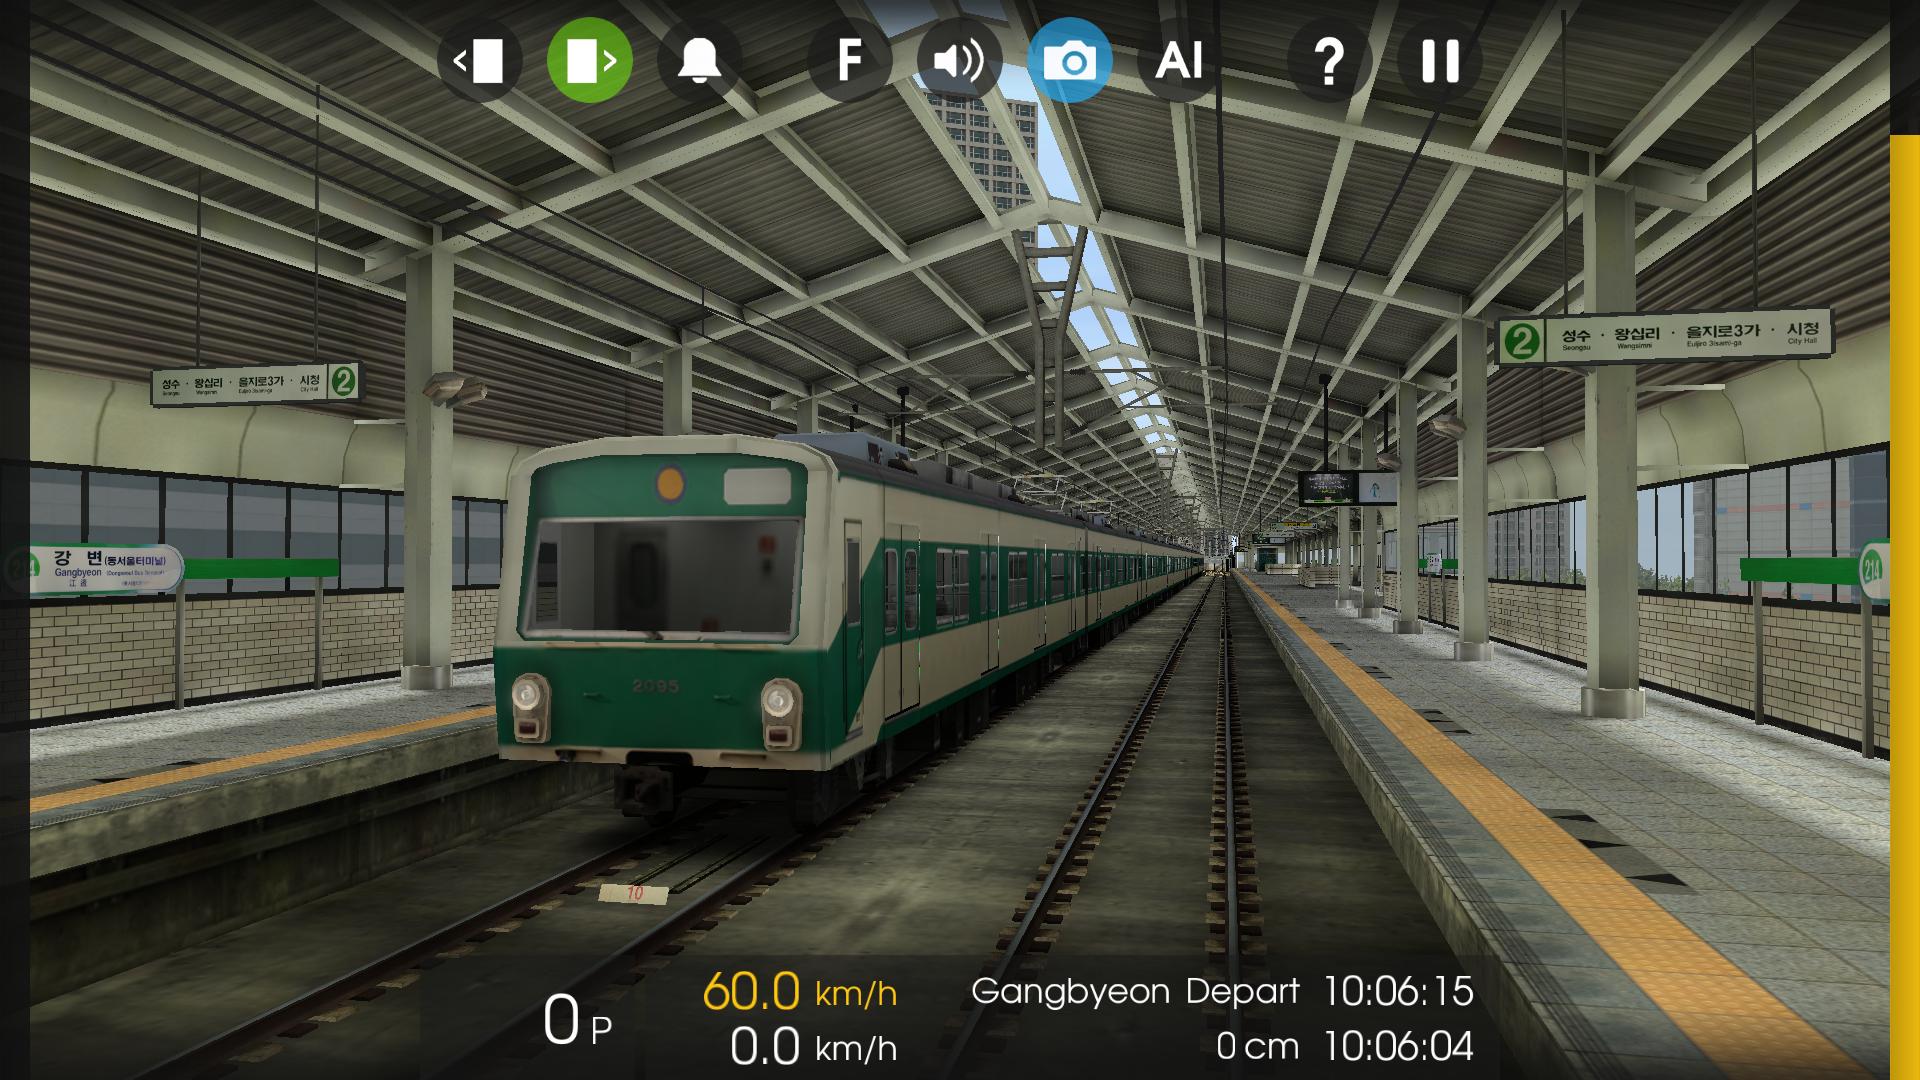 Игра subway simulator. Симулятор поезда Train Simulator. Симулятор поезда метро 2д. Hmmsim 2 Metro. Metro Simulator 2.